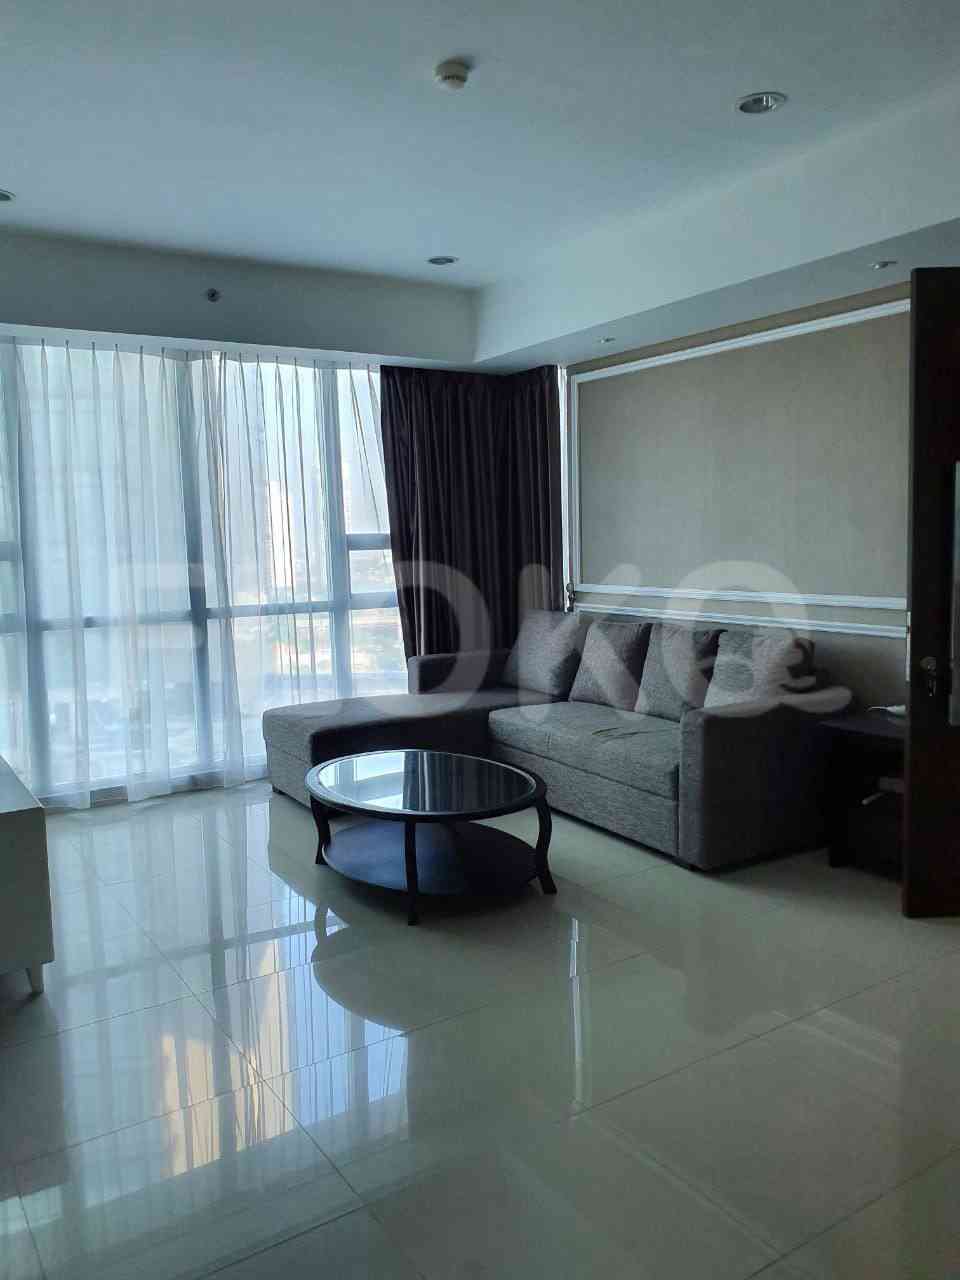 2 Bedroom on 16th Floor for Rent in Kemang Village Residence - fke113 2